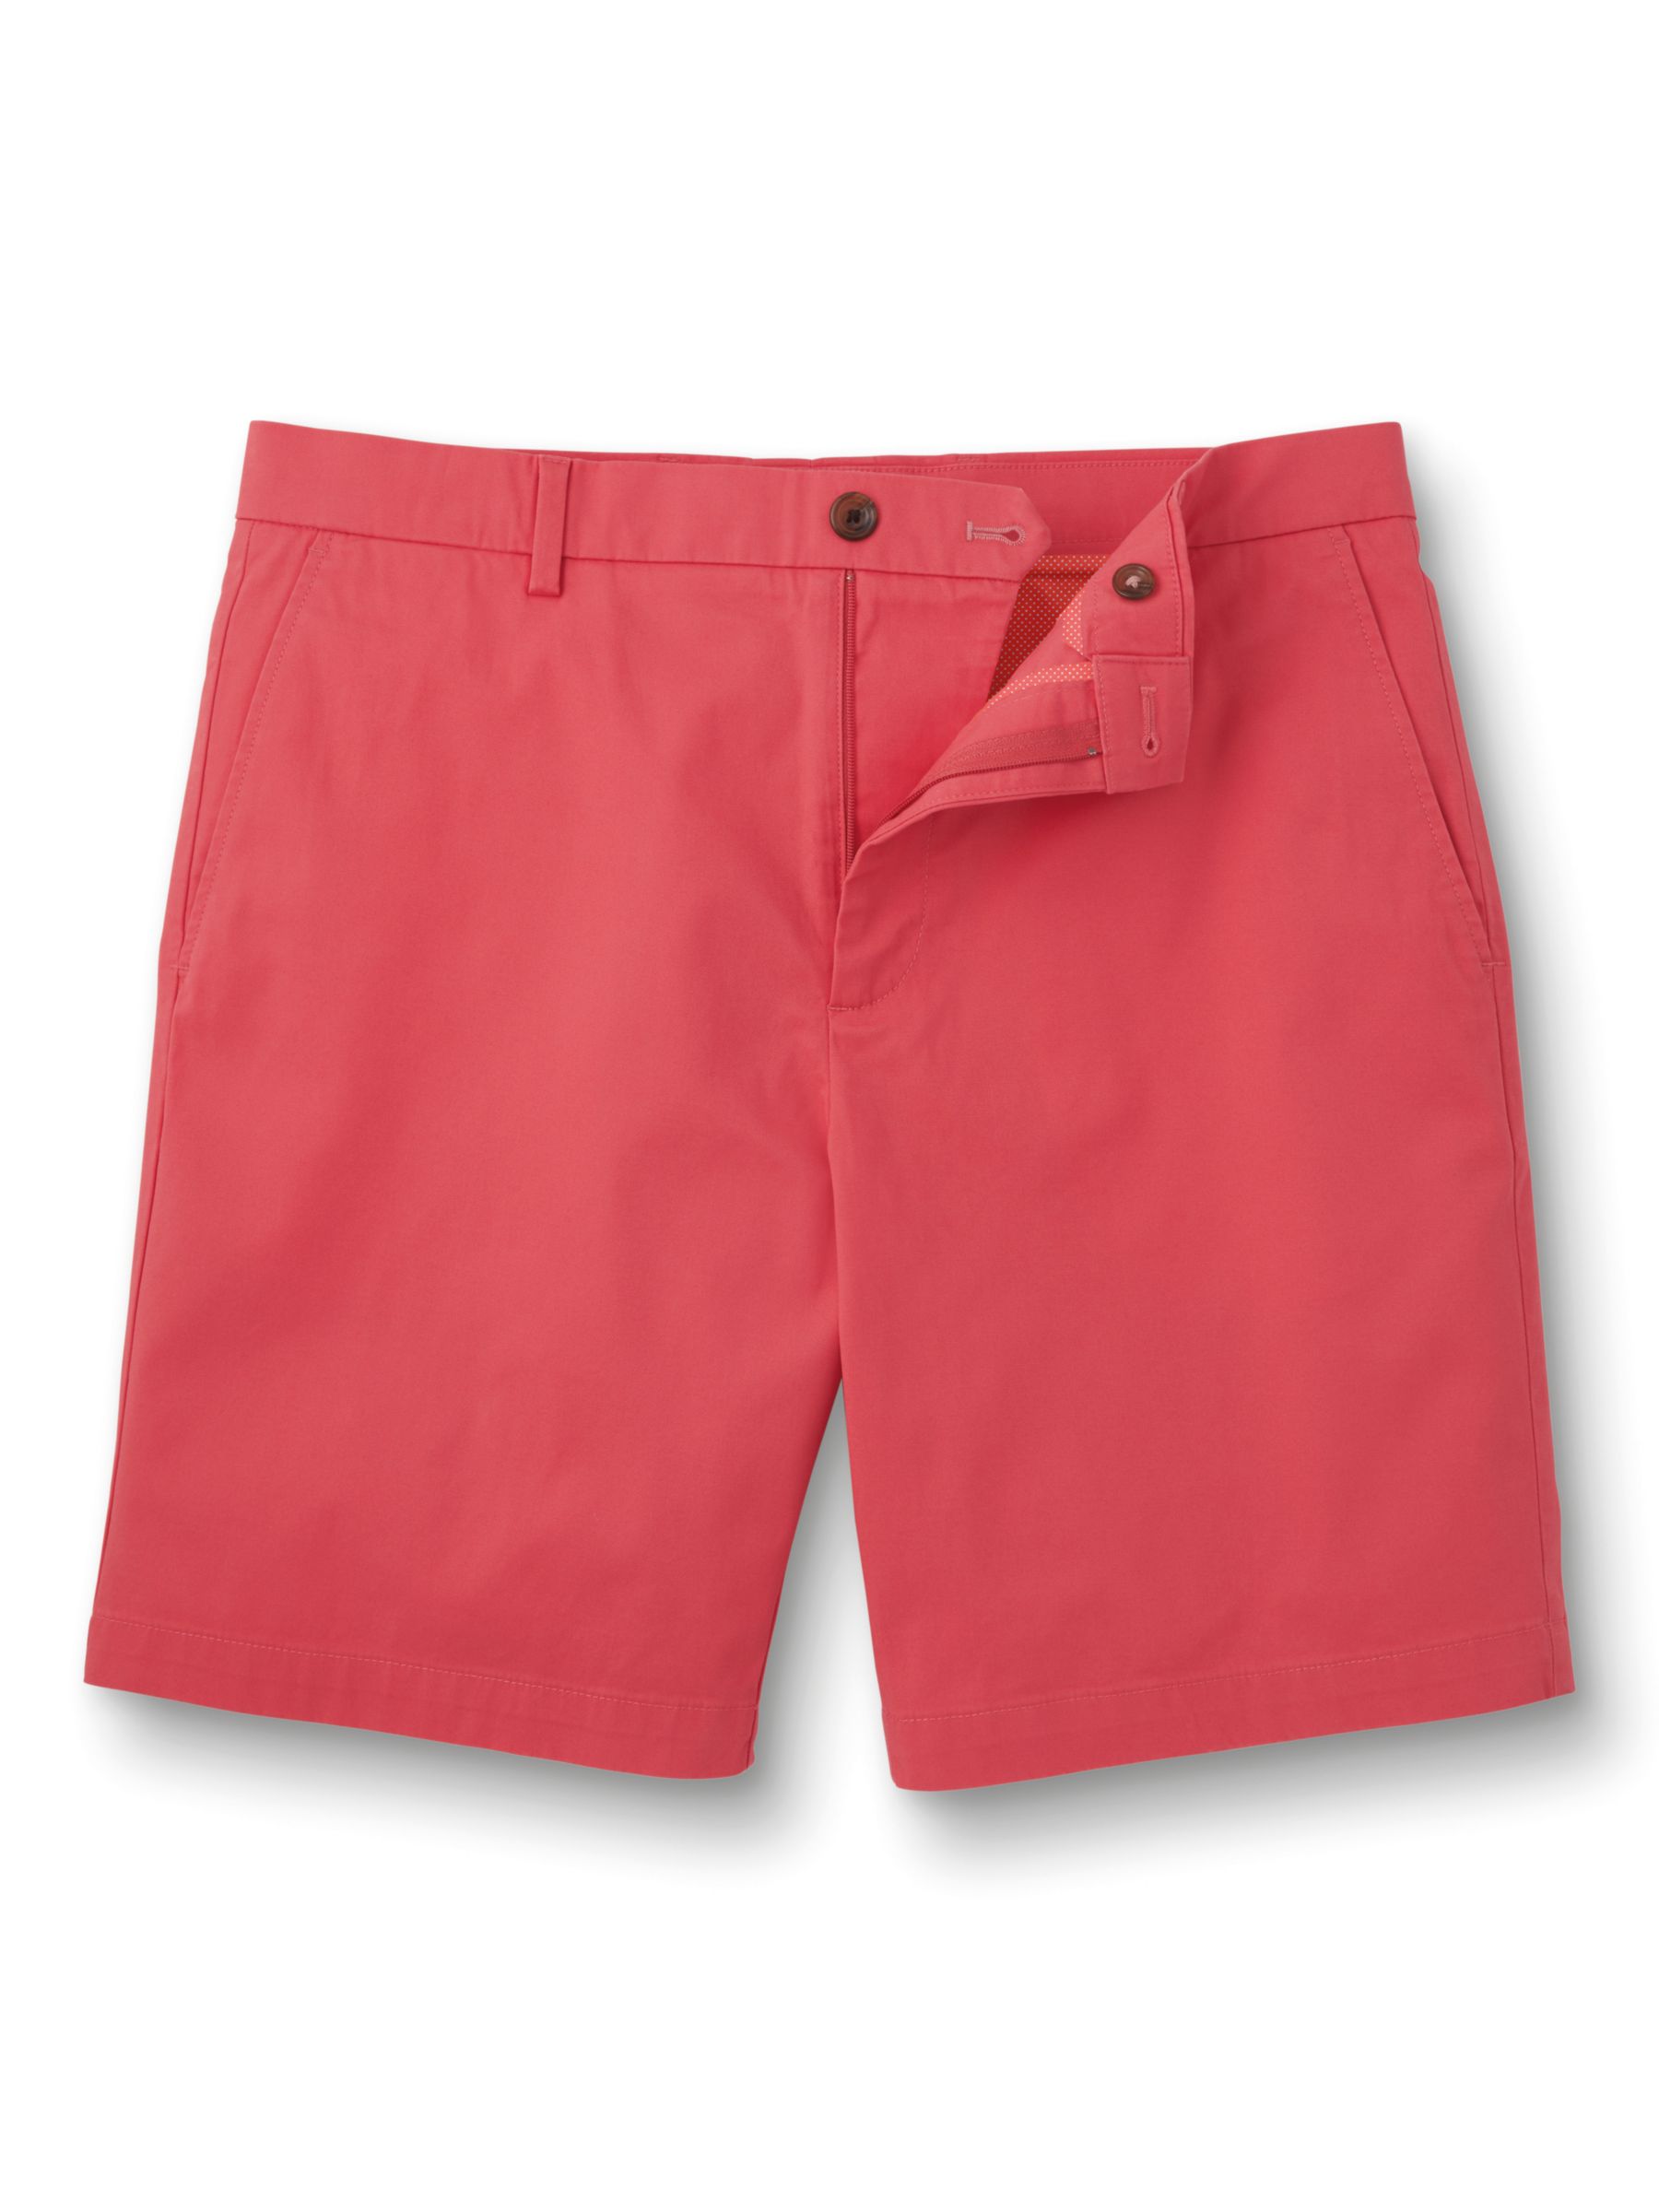 Charles Tyrwhitt Slim Fit Cotton Blend Shorts, Coral Pink, 30